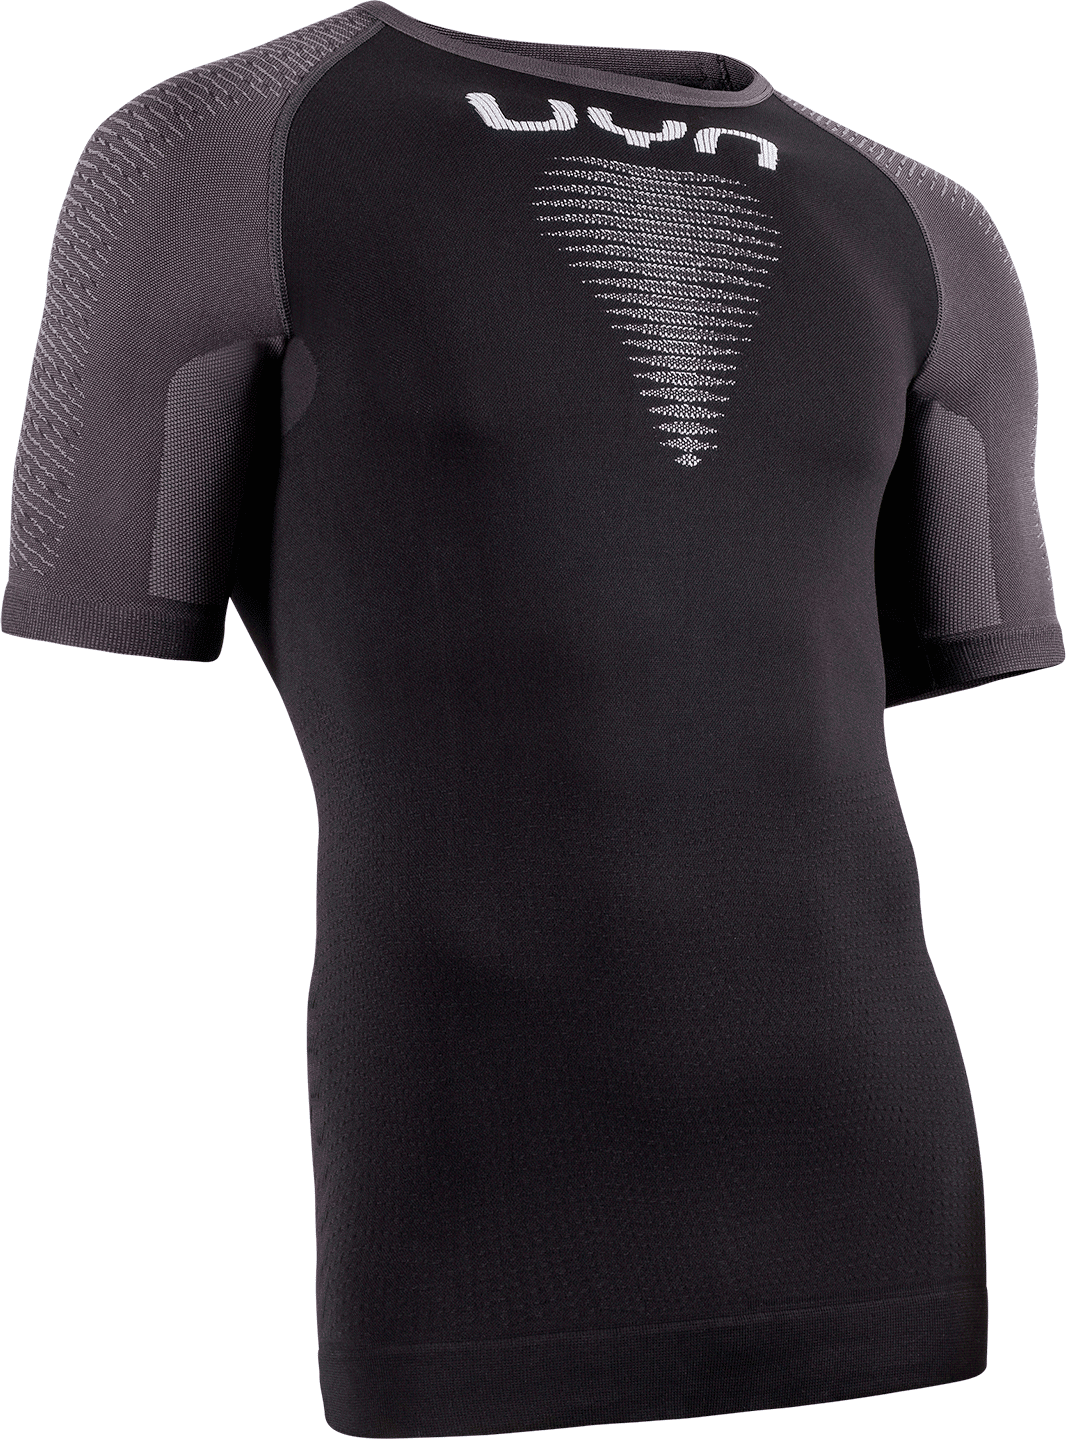 Uyn Marathon - T-shirt - Men's